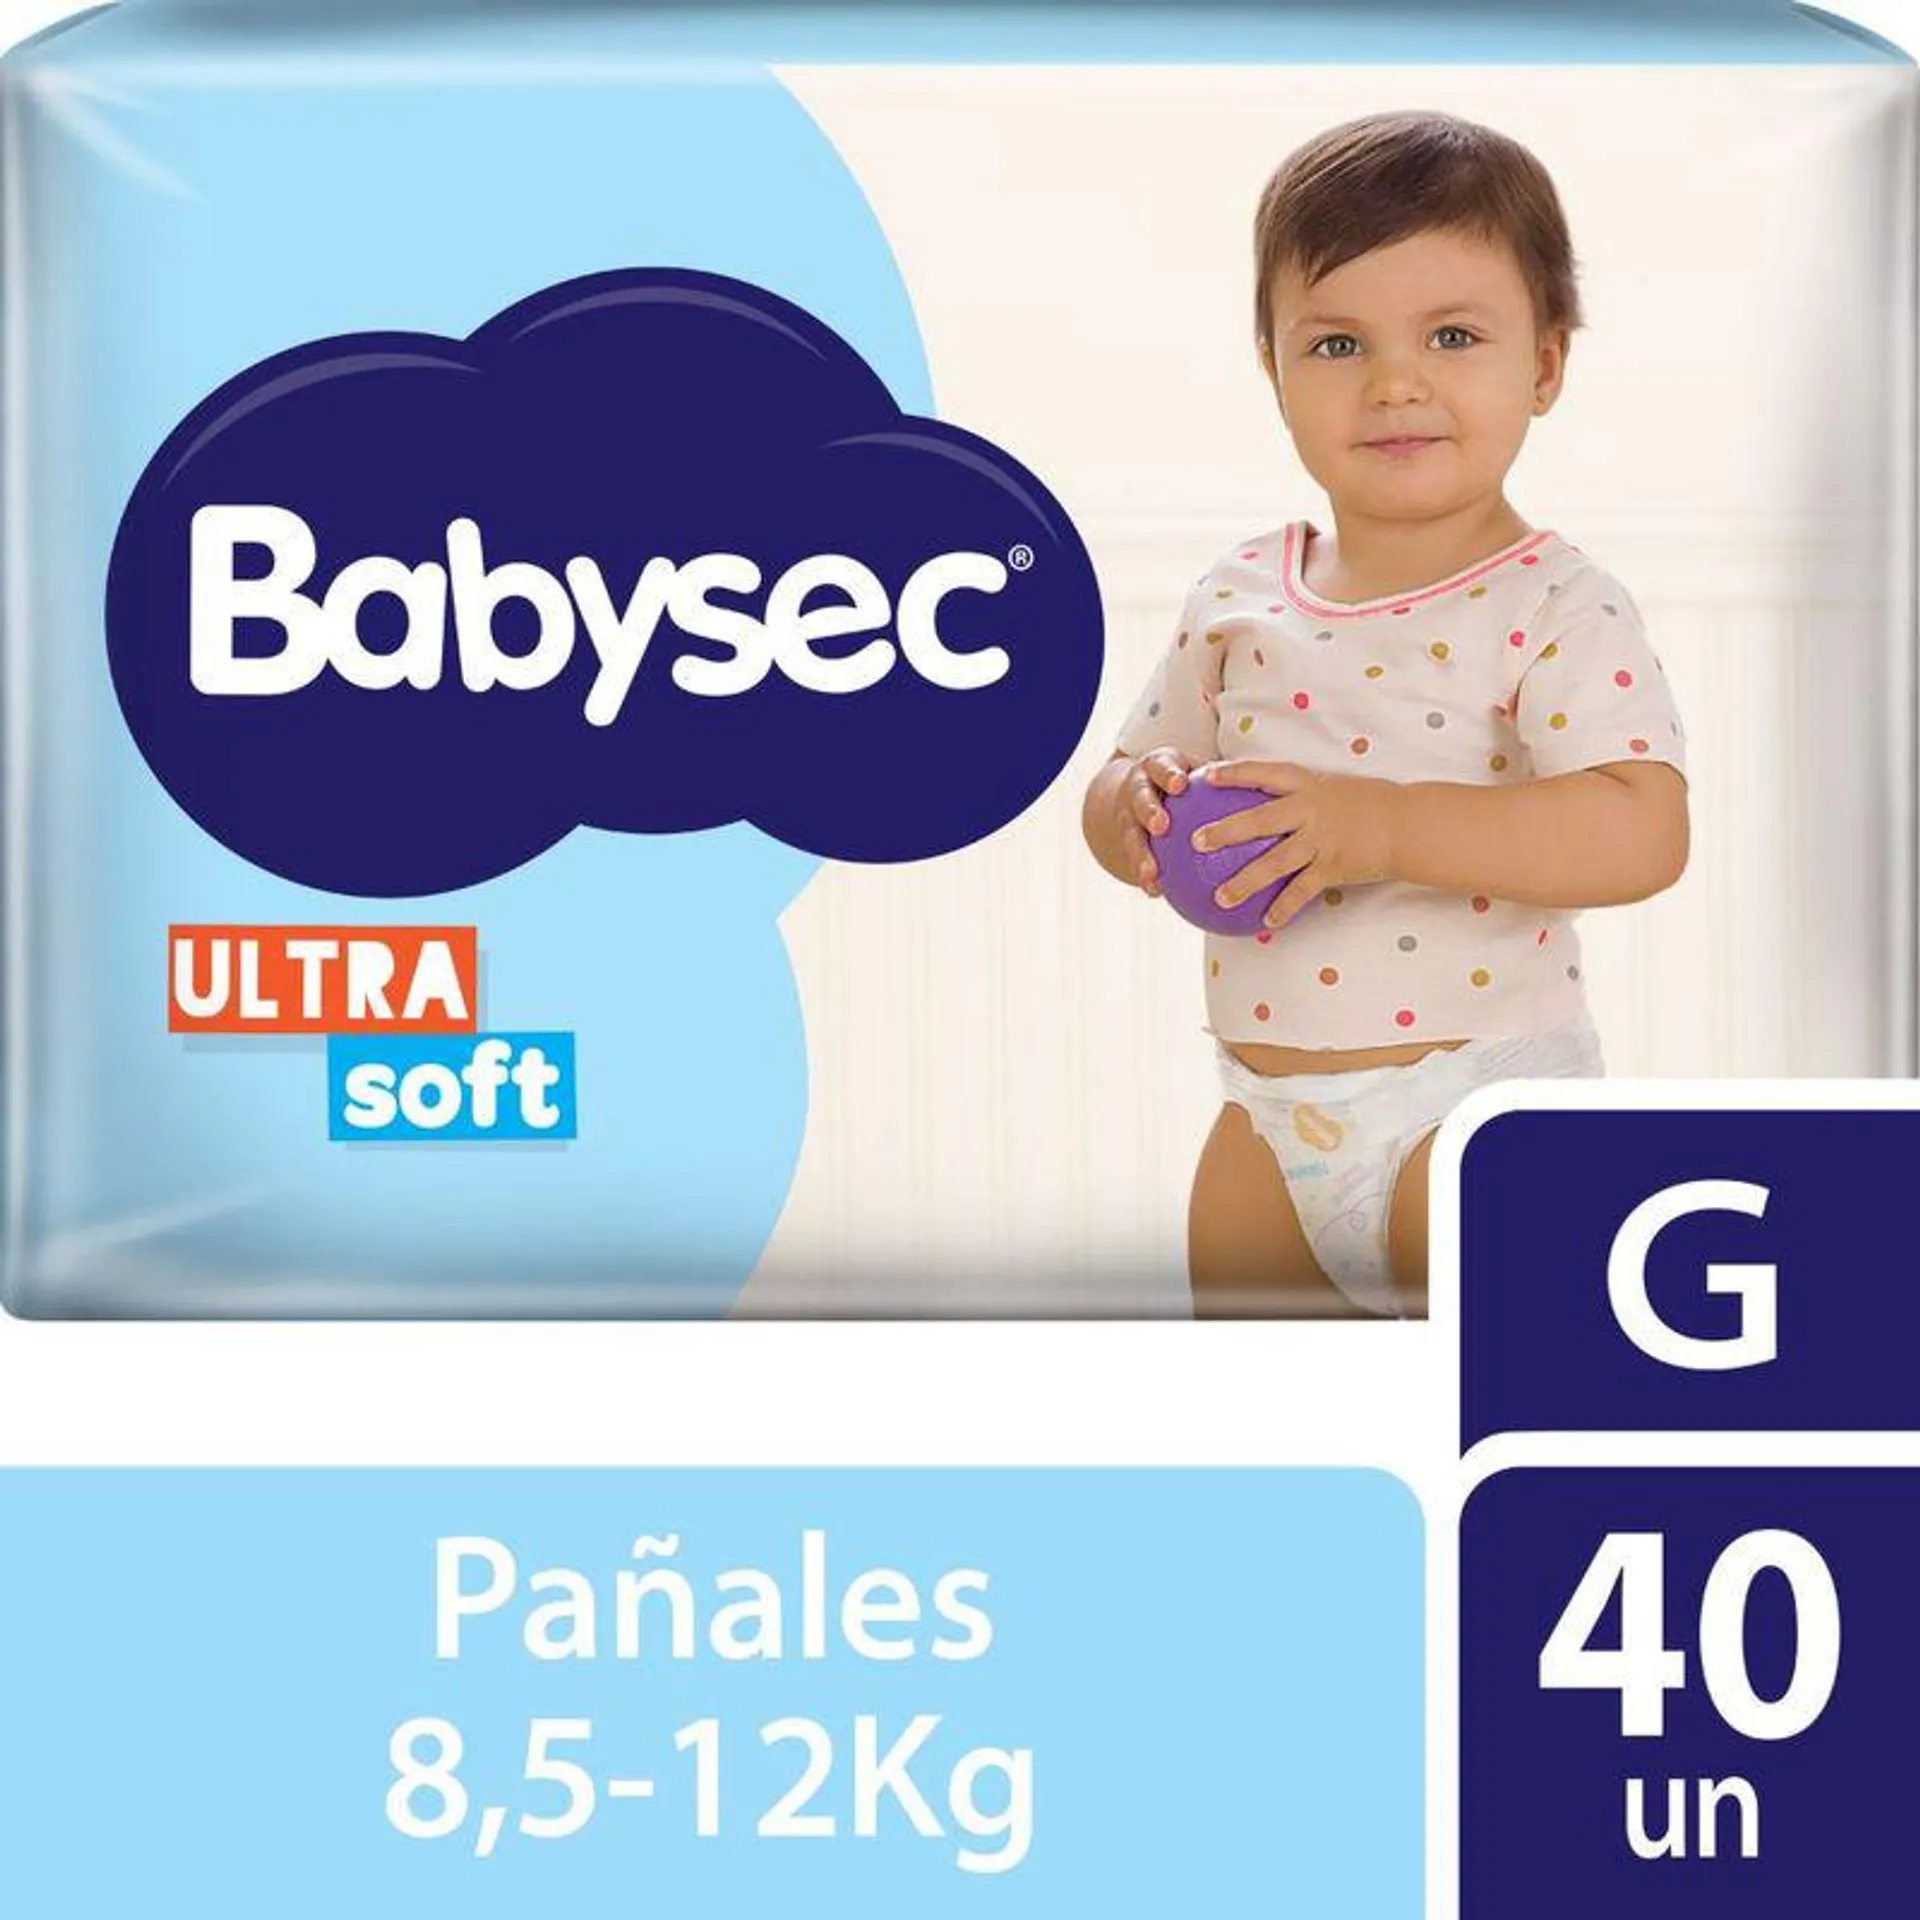 Pañales Babysec Ultrasoft talle G x 40 Ud.